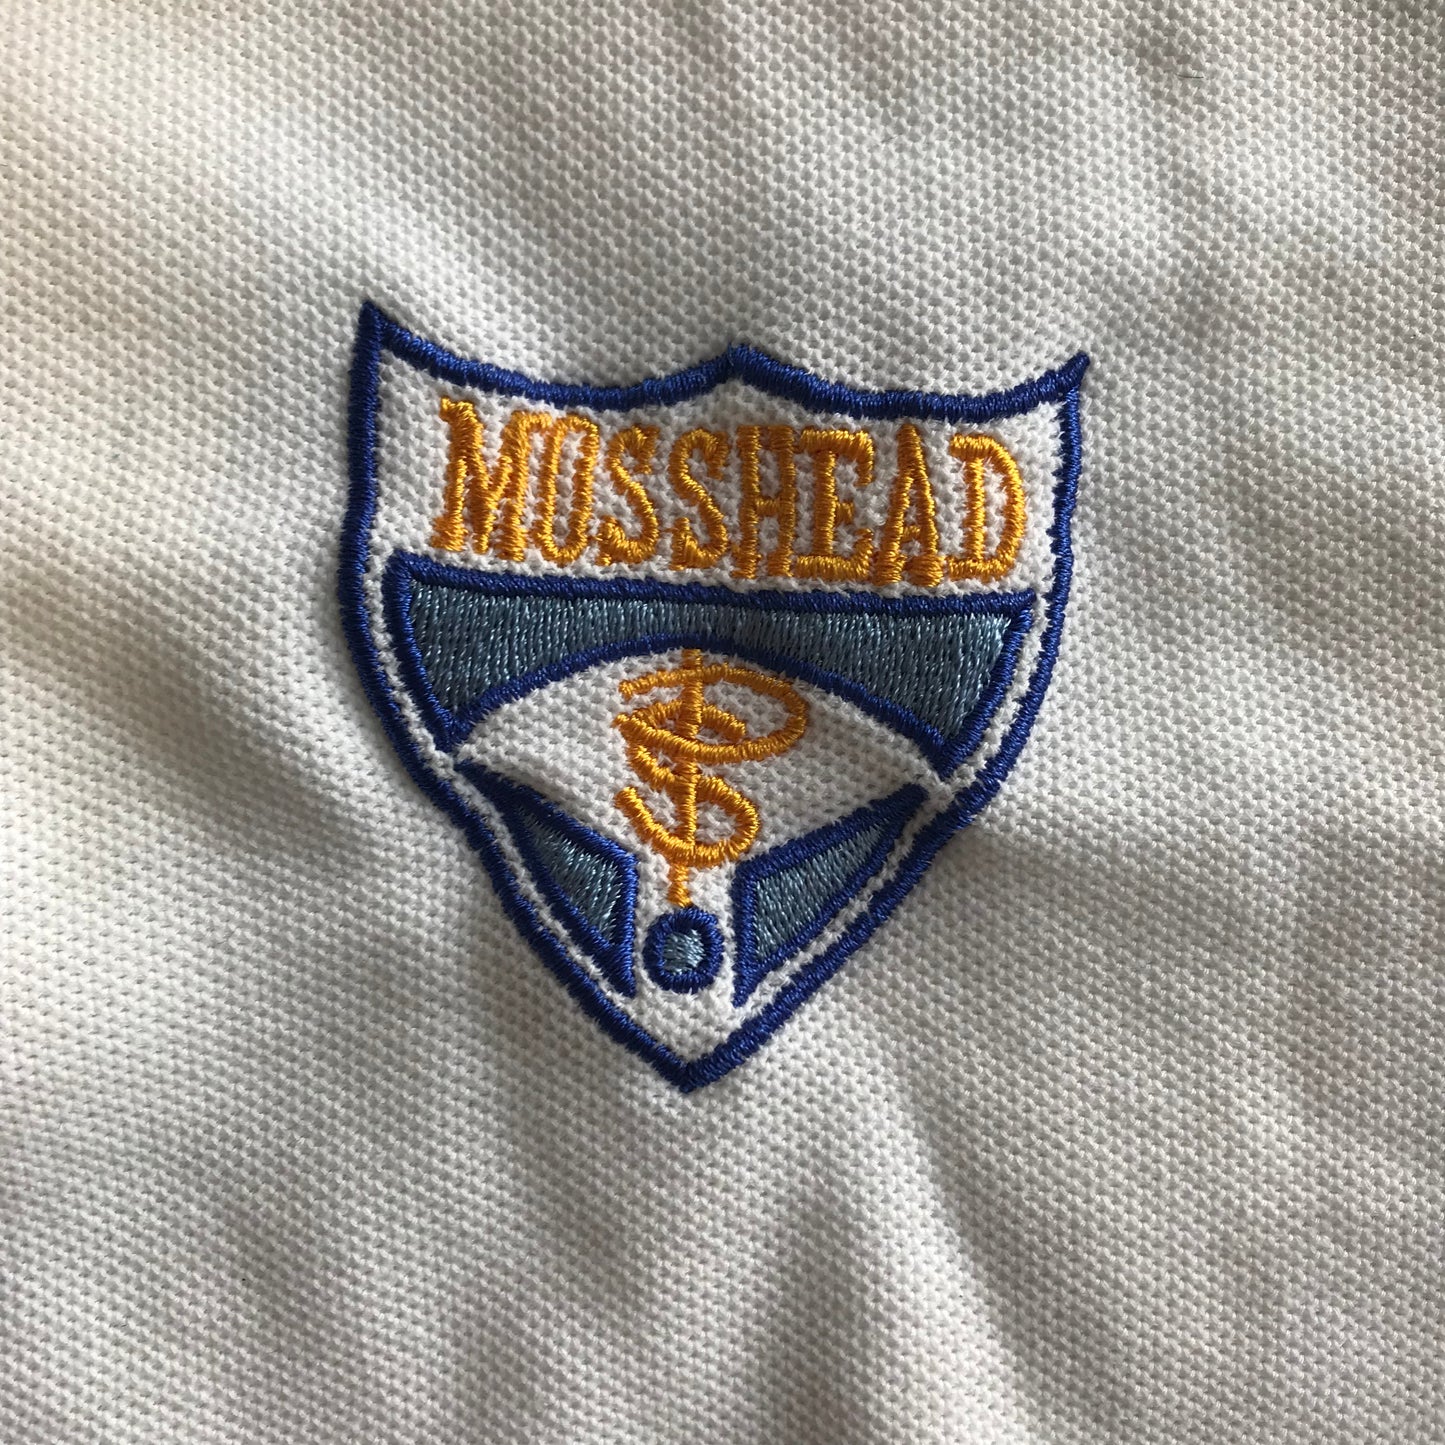 Mosshead Primary White Polo Shirt